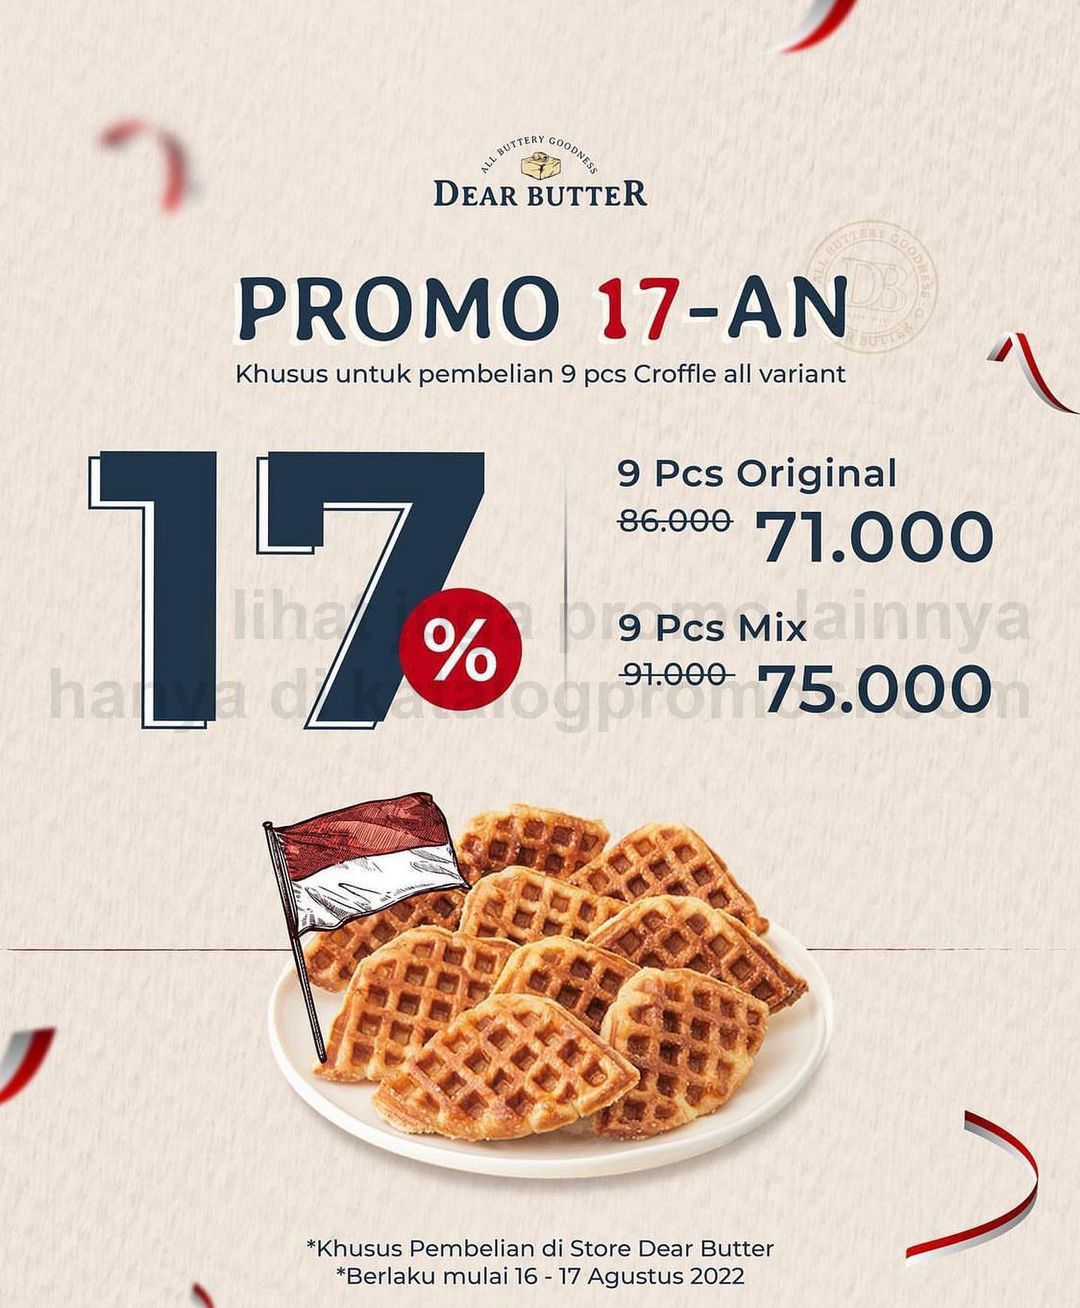 Promo Dear Butter DISKON SPESIAL 17-AN! DISKON 17% untuk 9pcs croffle original & mix